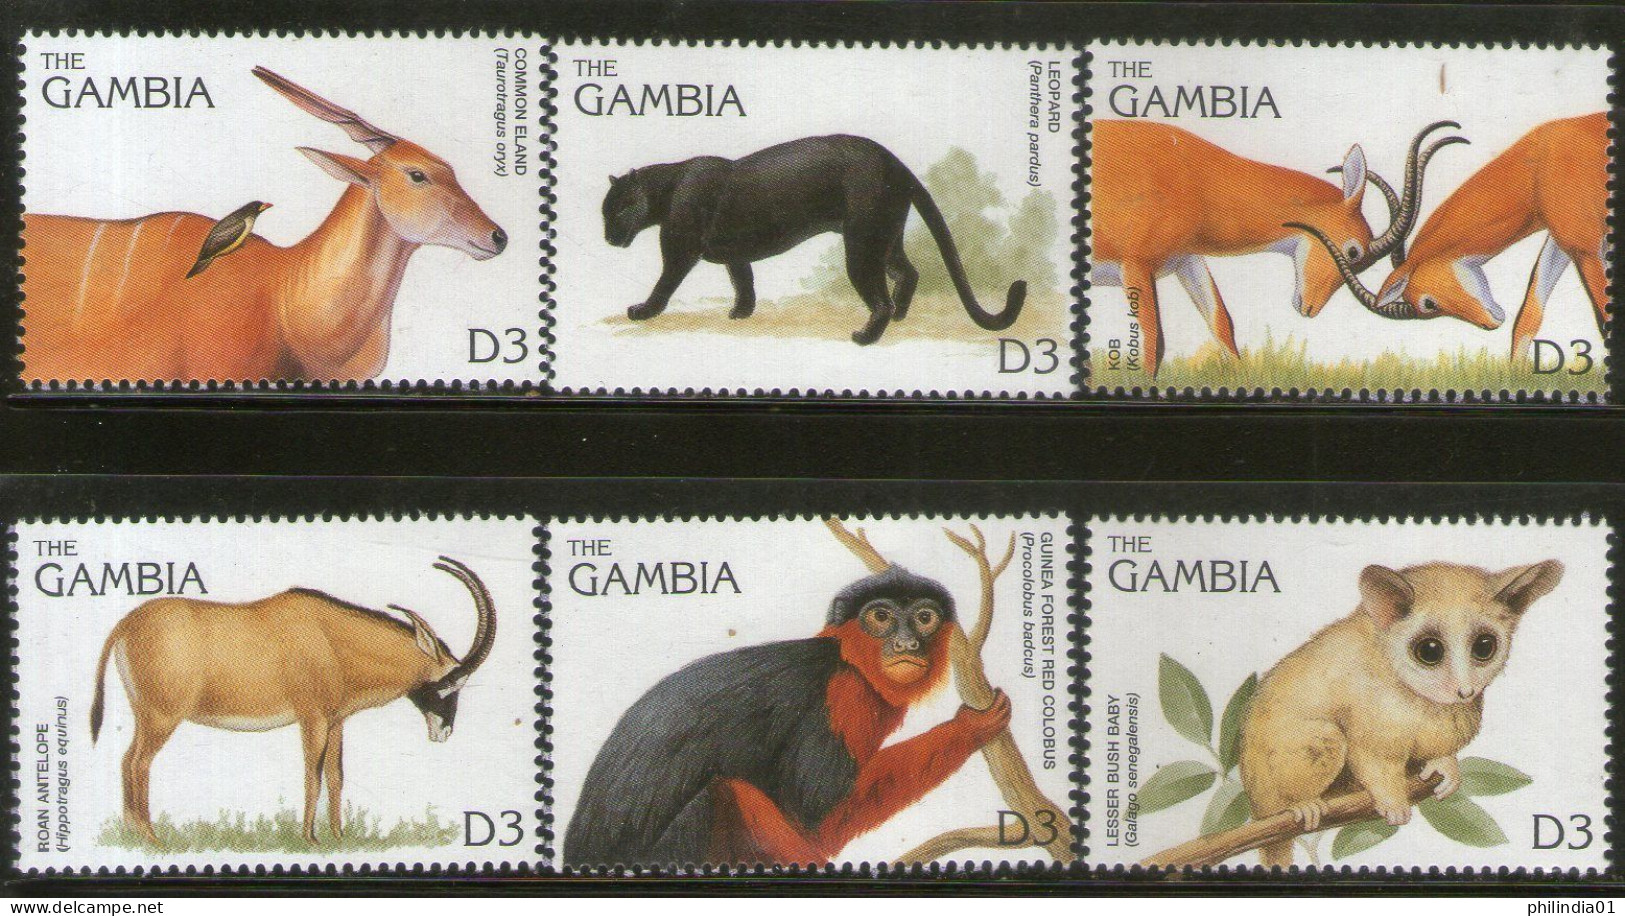 Gambia 1996 Monkey Mammals Wildlife Animals Sc 1740 6v MNH # 807 - Scimmie